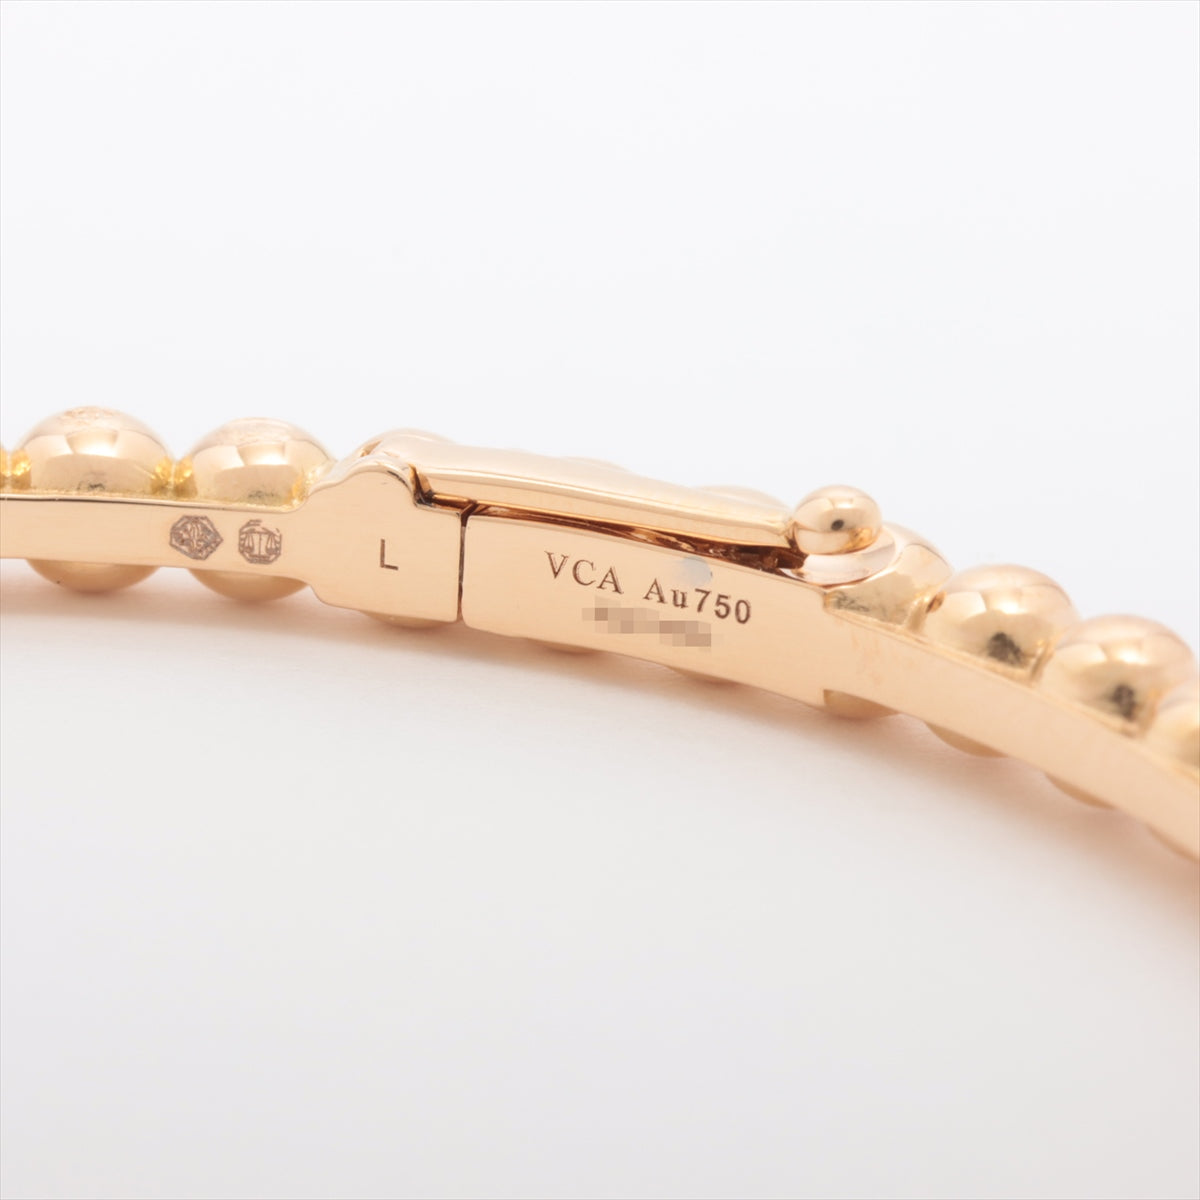 Van Cleef &amp; Arpels Golden Pearl Bracelet 750 (PG) 21.6g L VCARO95800